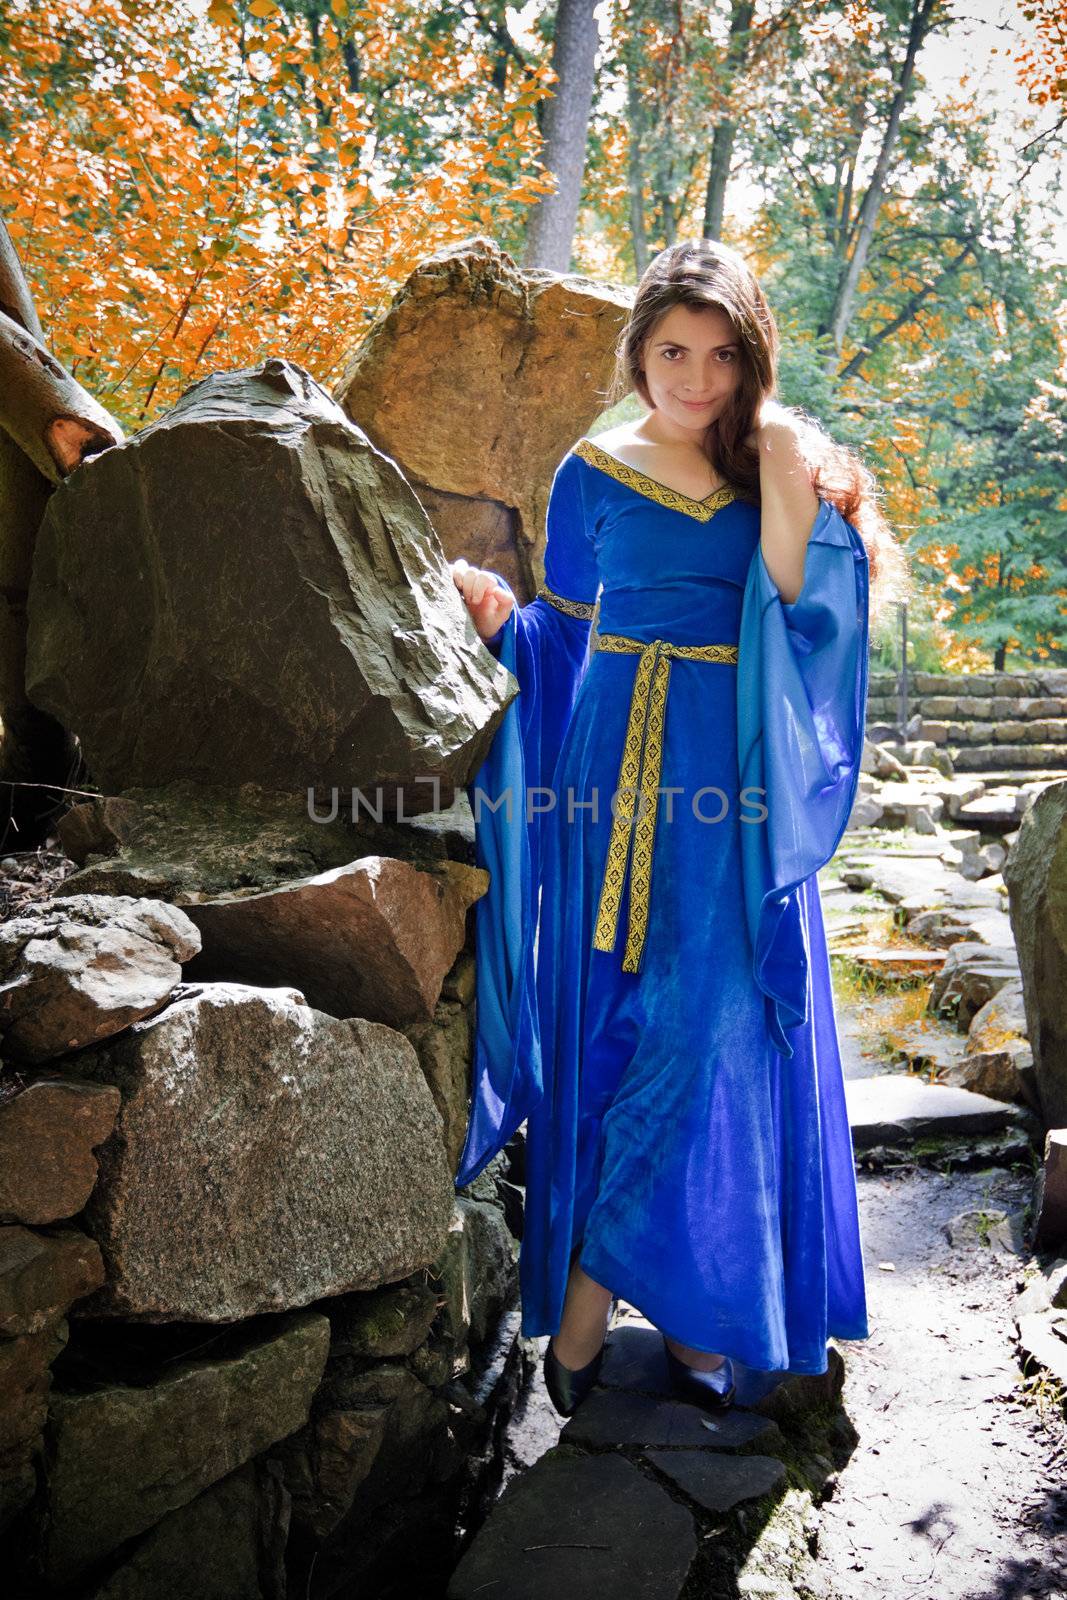 beautiful medieval princess in autumn stone garden